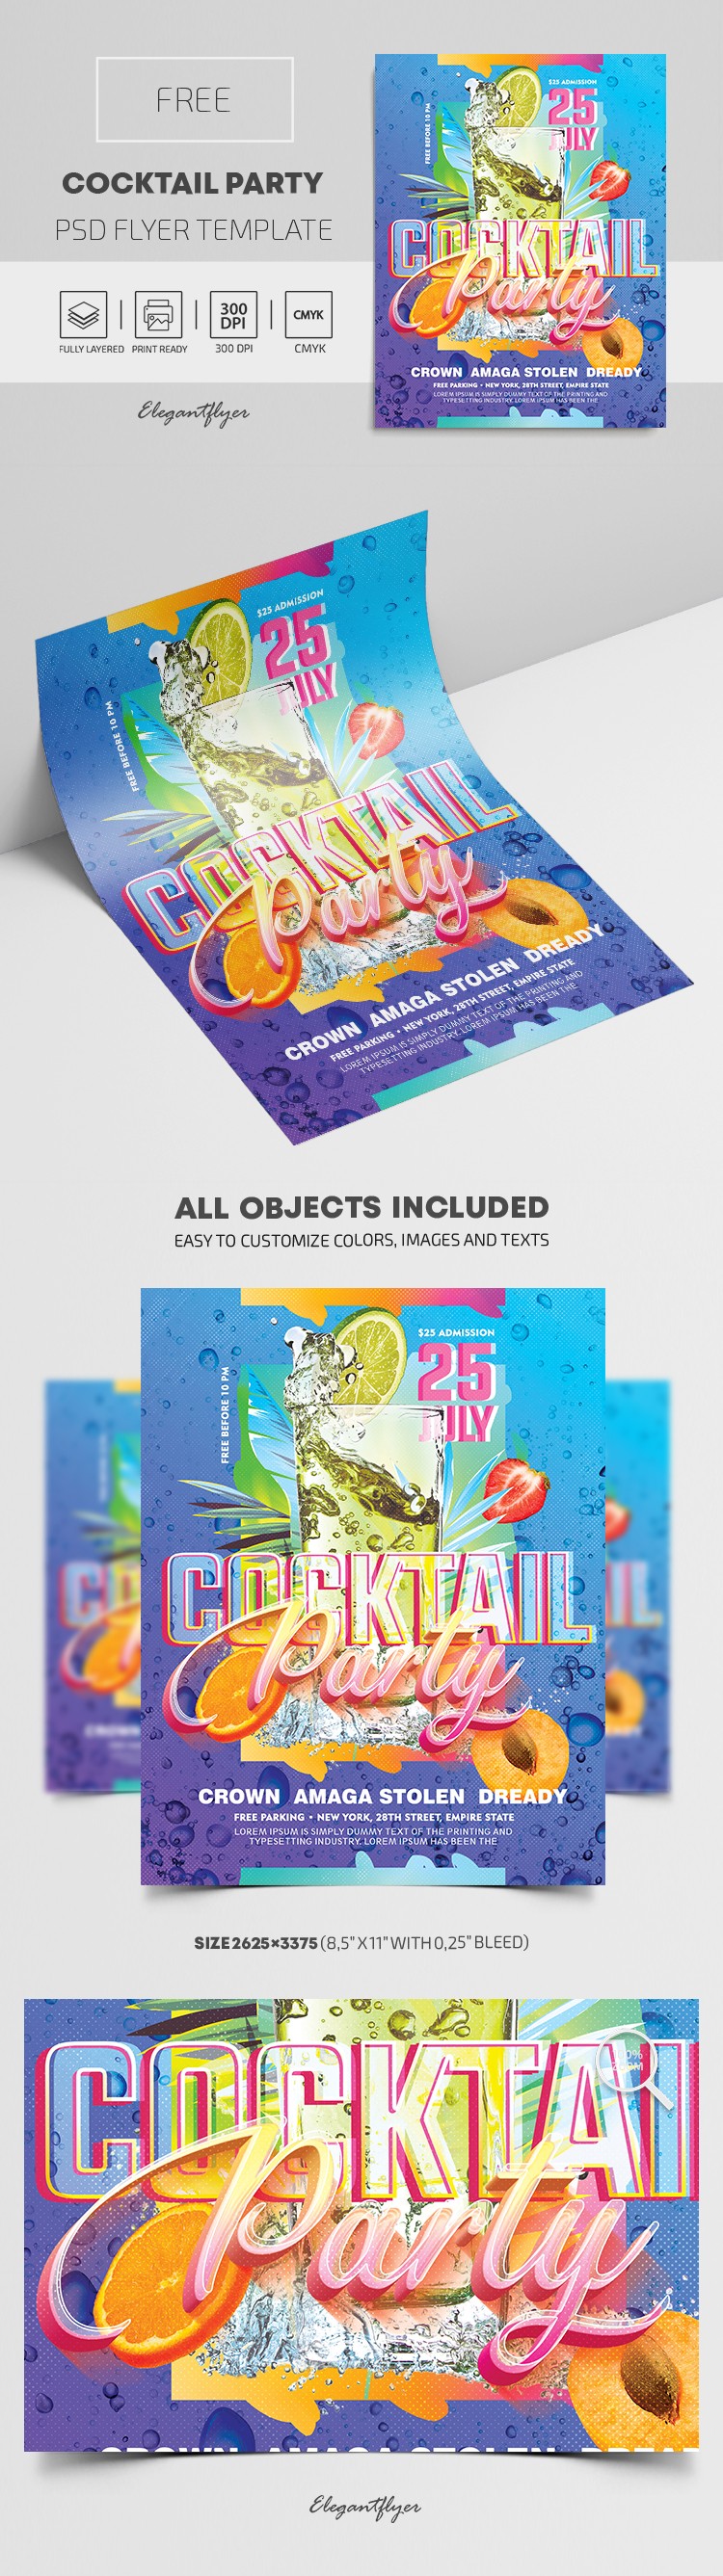 Cocktail Party Flyer by ElegantFlyer